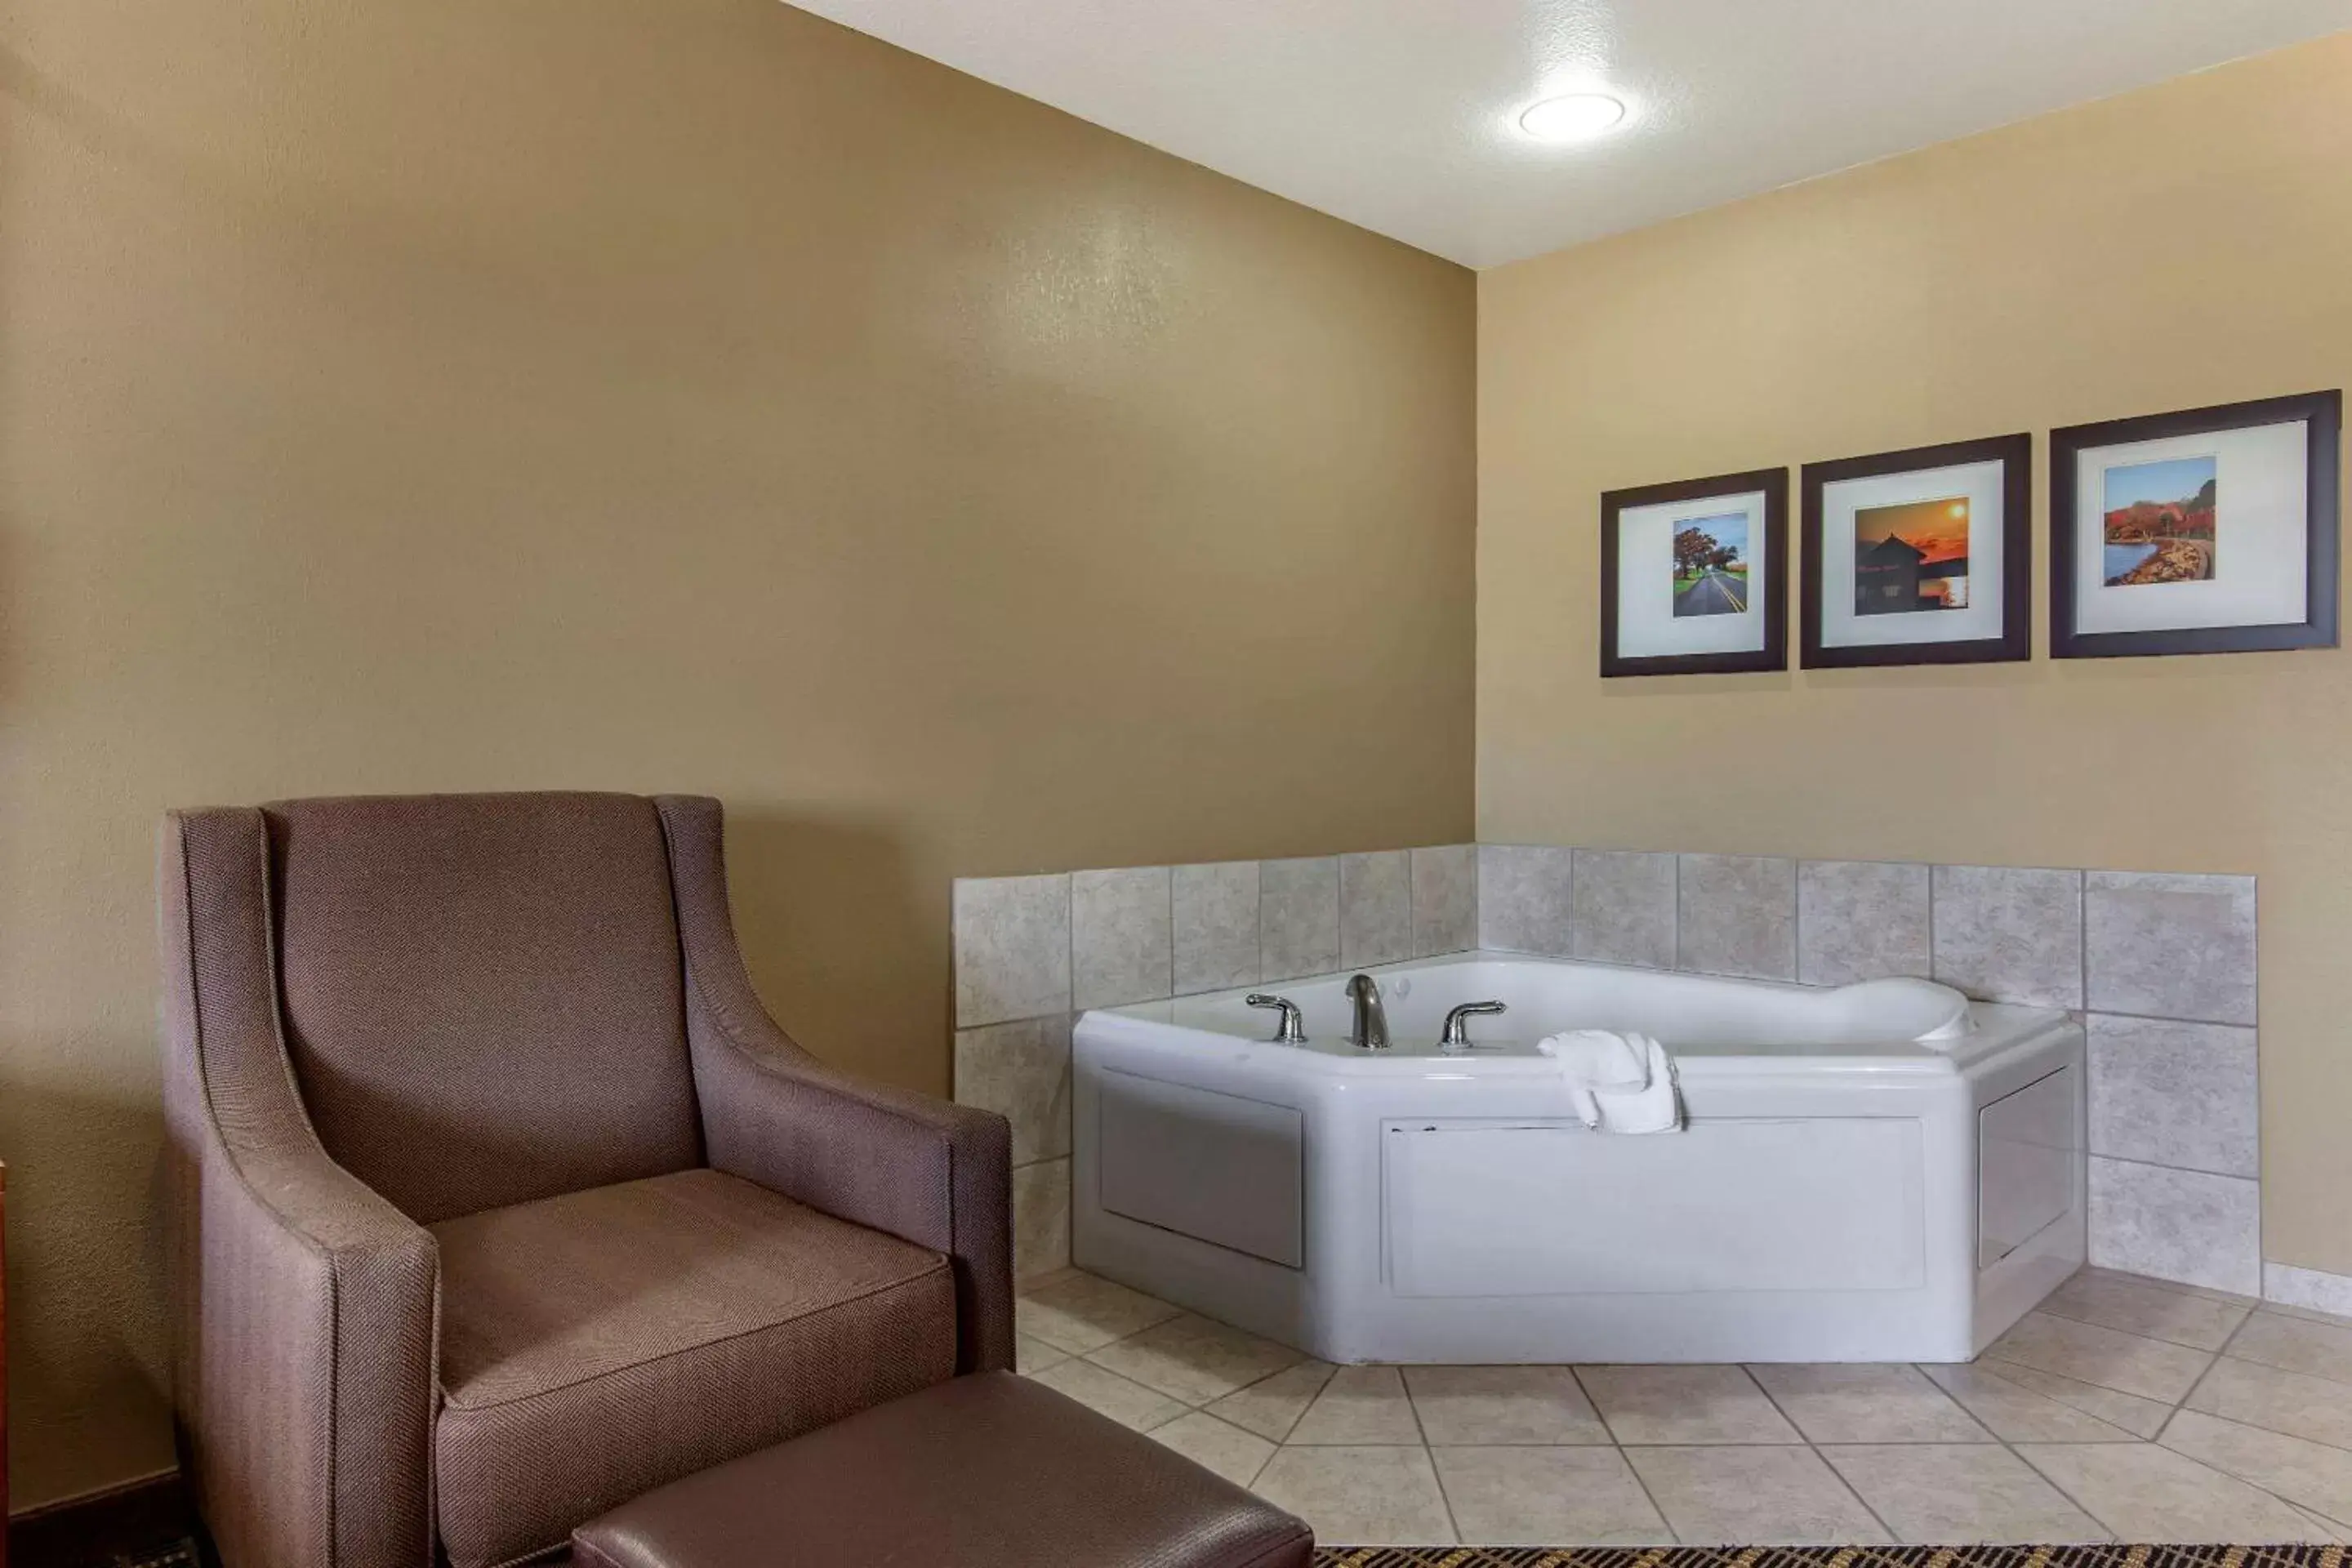 Photo of the whole room, Seating Area in Comfort Suites Delavan - Lake Geneva Area